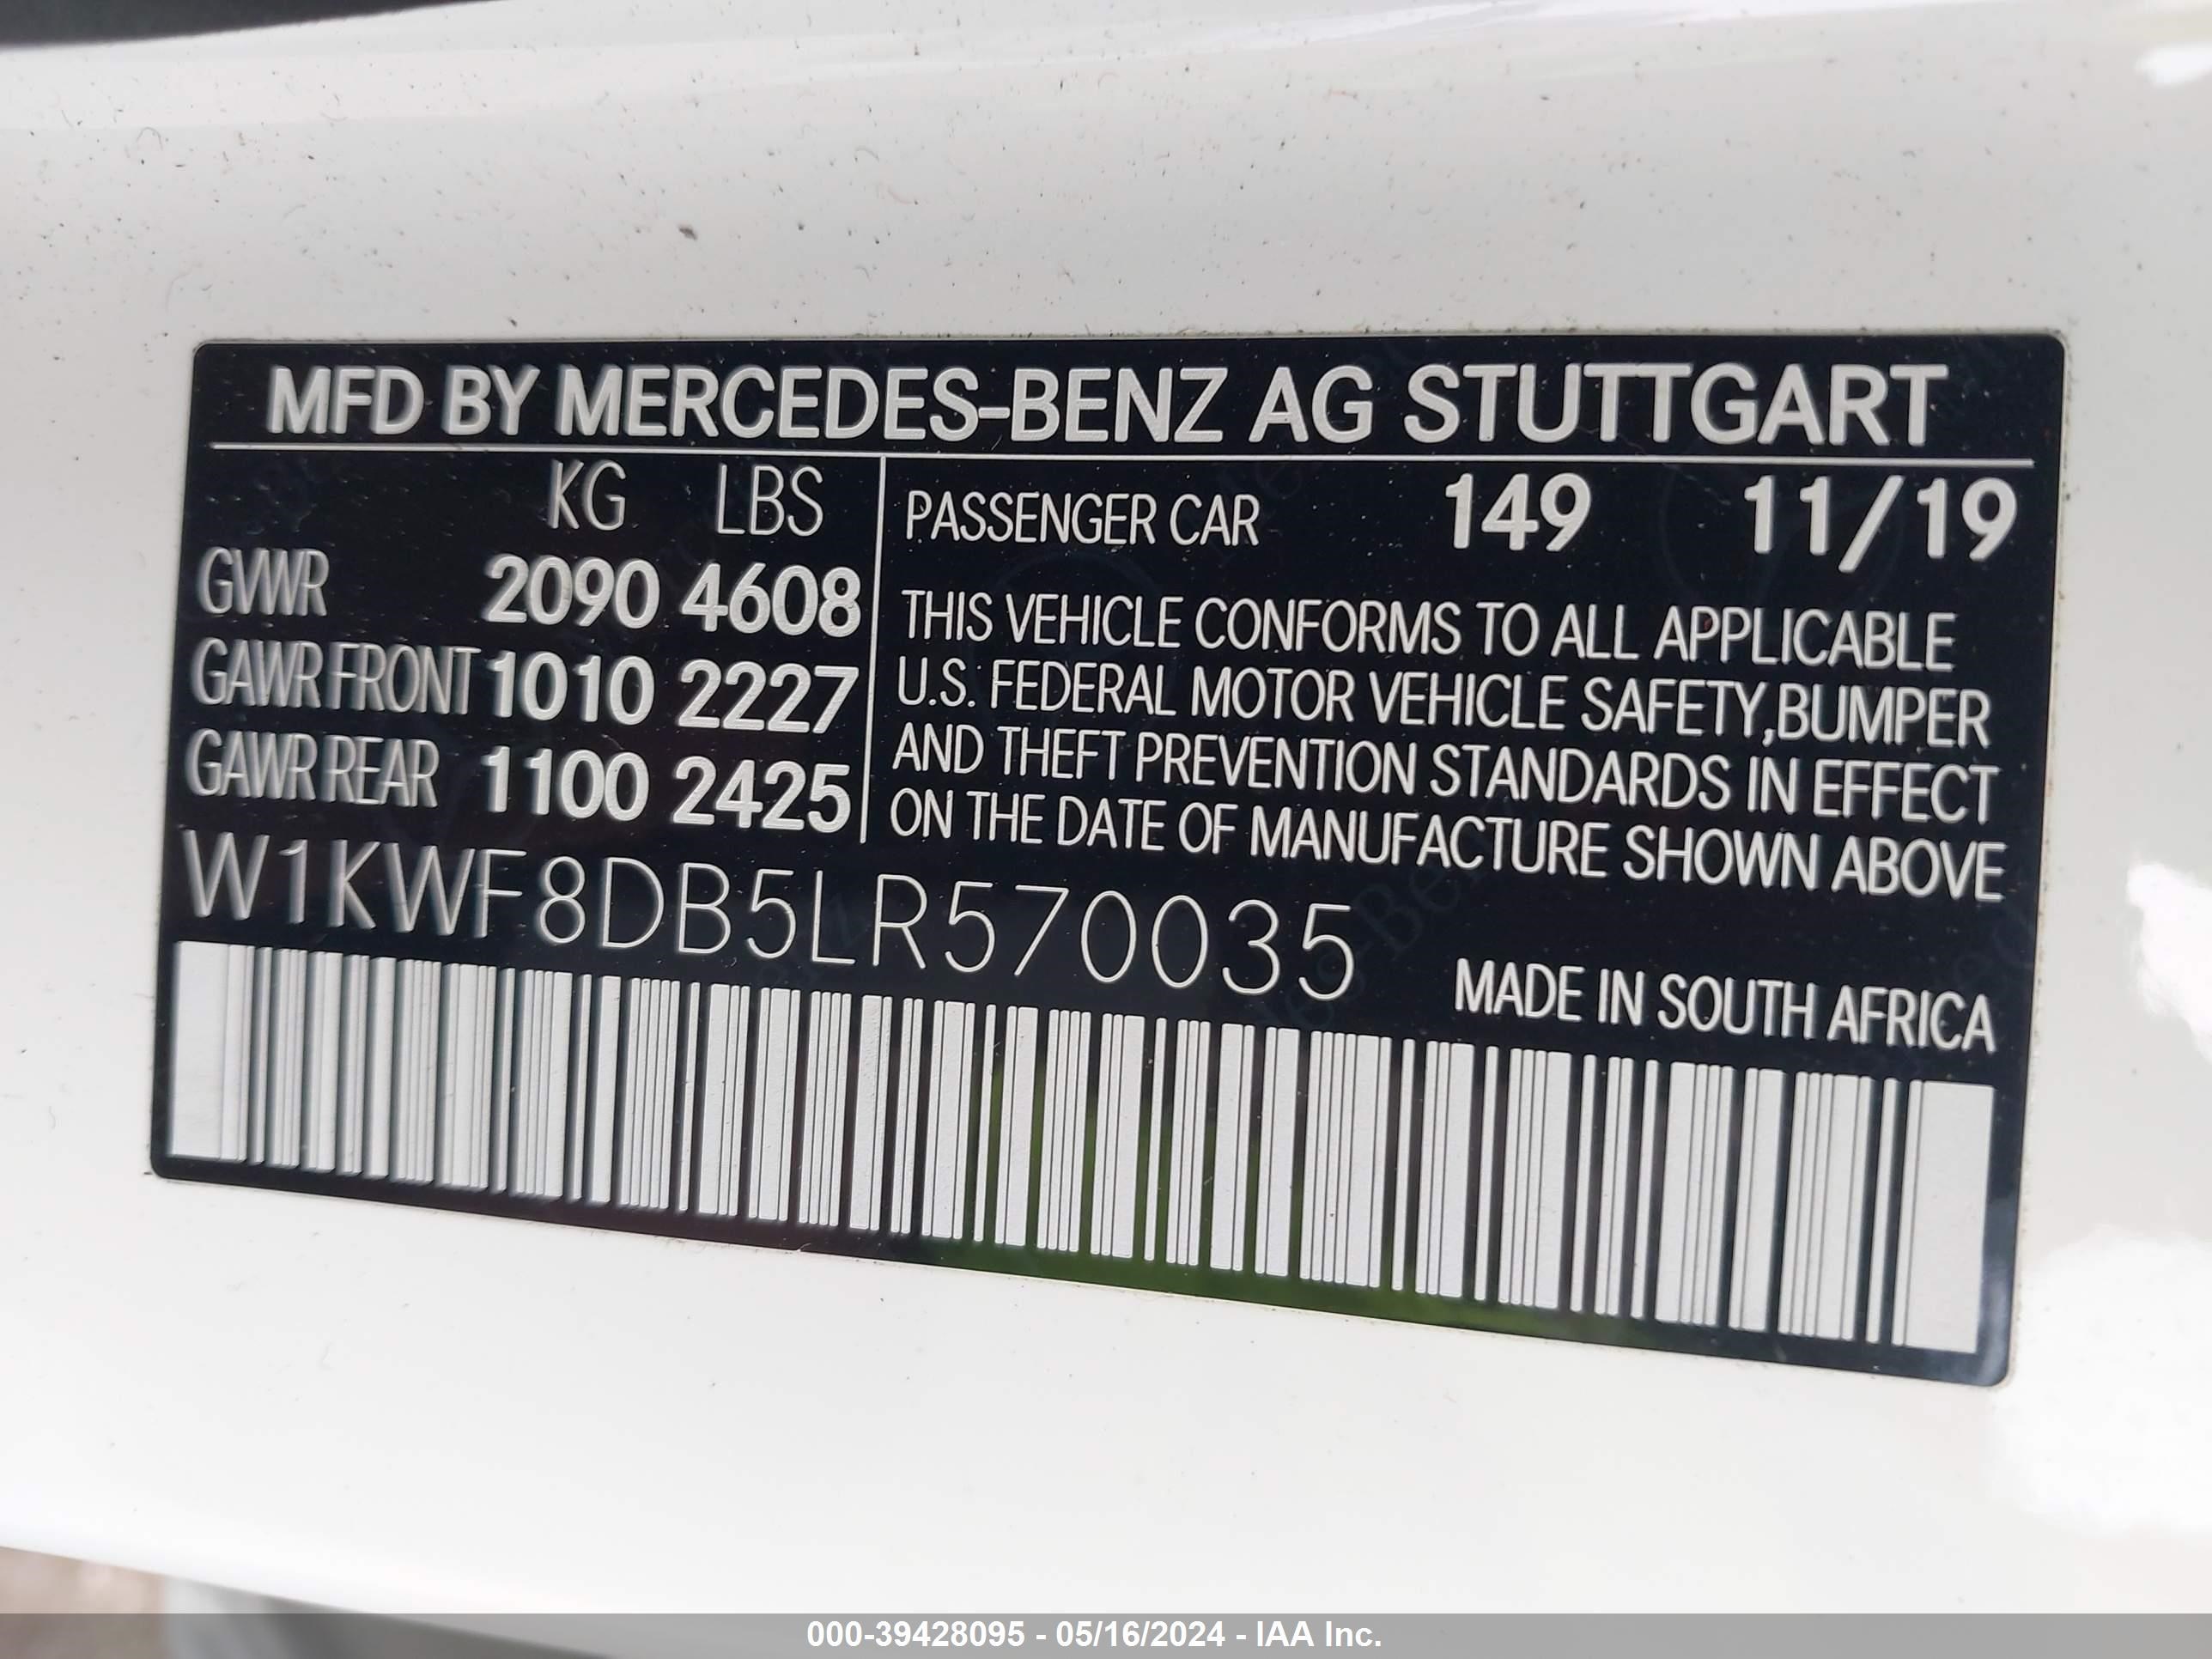 2020 Mercedes-Benz C 300 vin: W1KWF8DB5LR570035